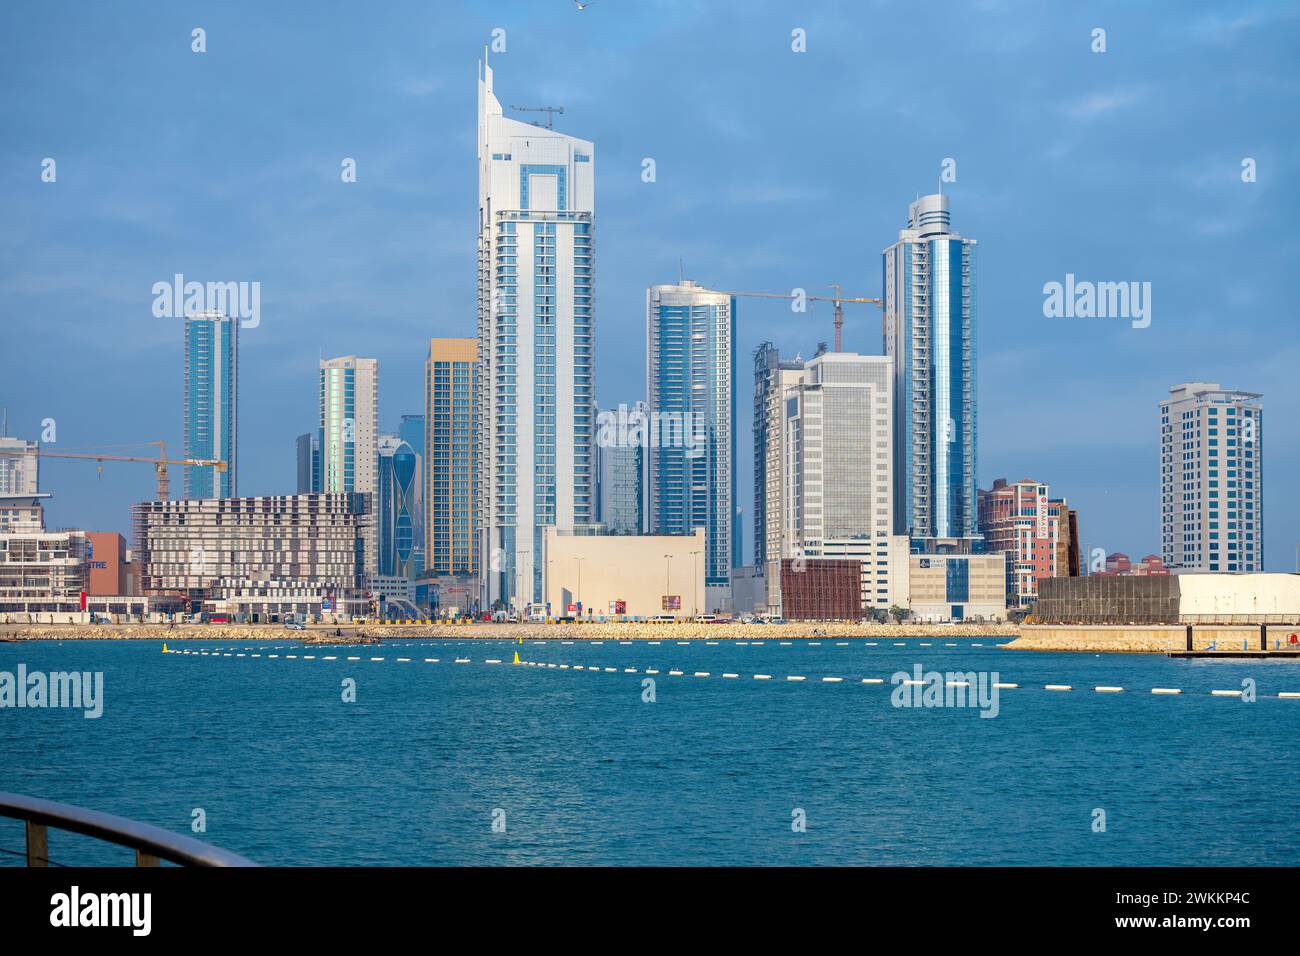 Bahrain Financial Harbor, Harbor Towers, Bahrain Skyline view sunset sunrise Stock Photo